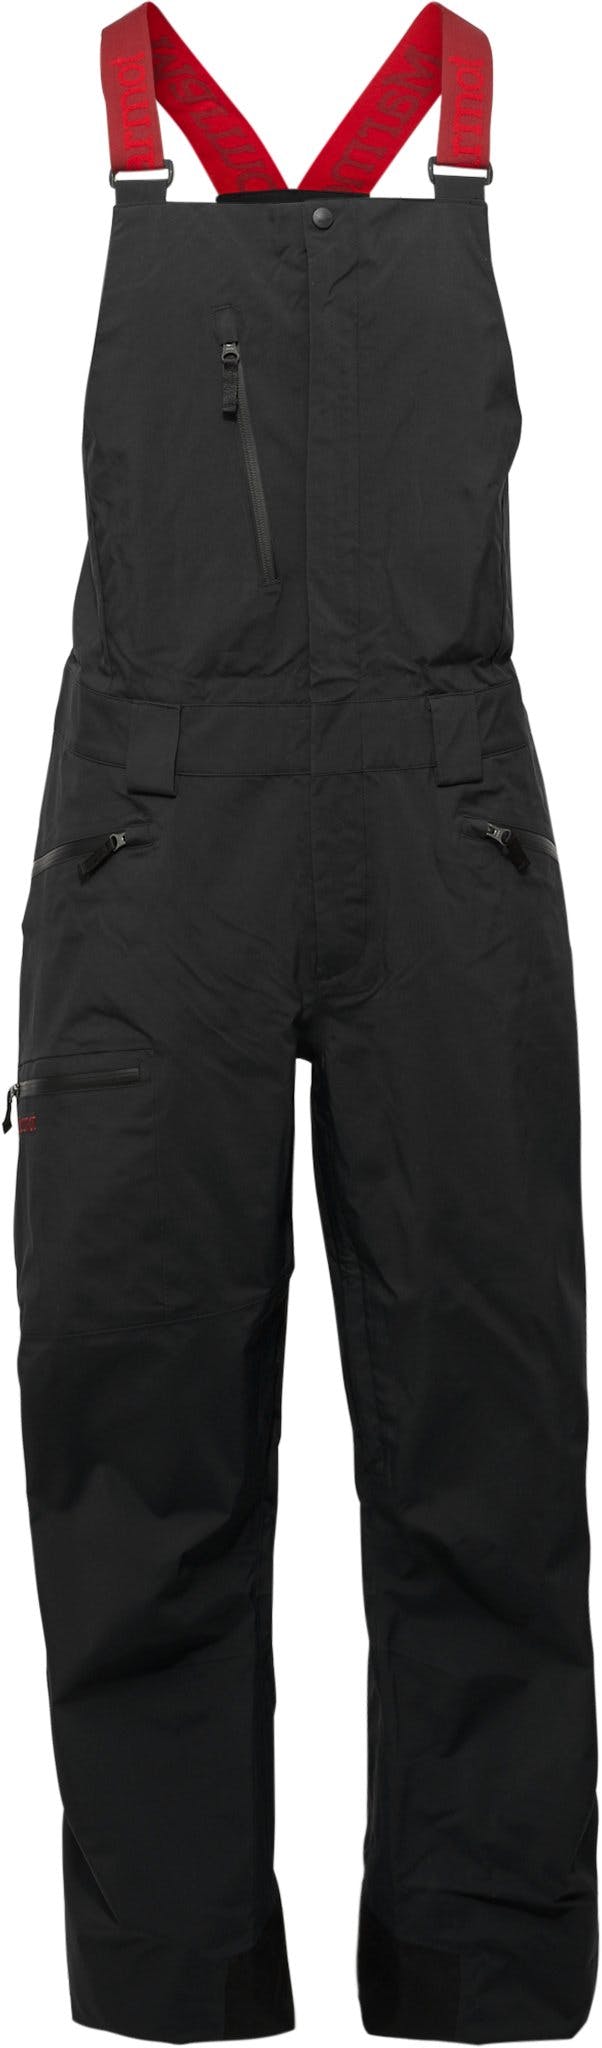 Product image for Patrol Bib Snow Pants - Men's